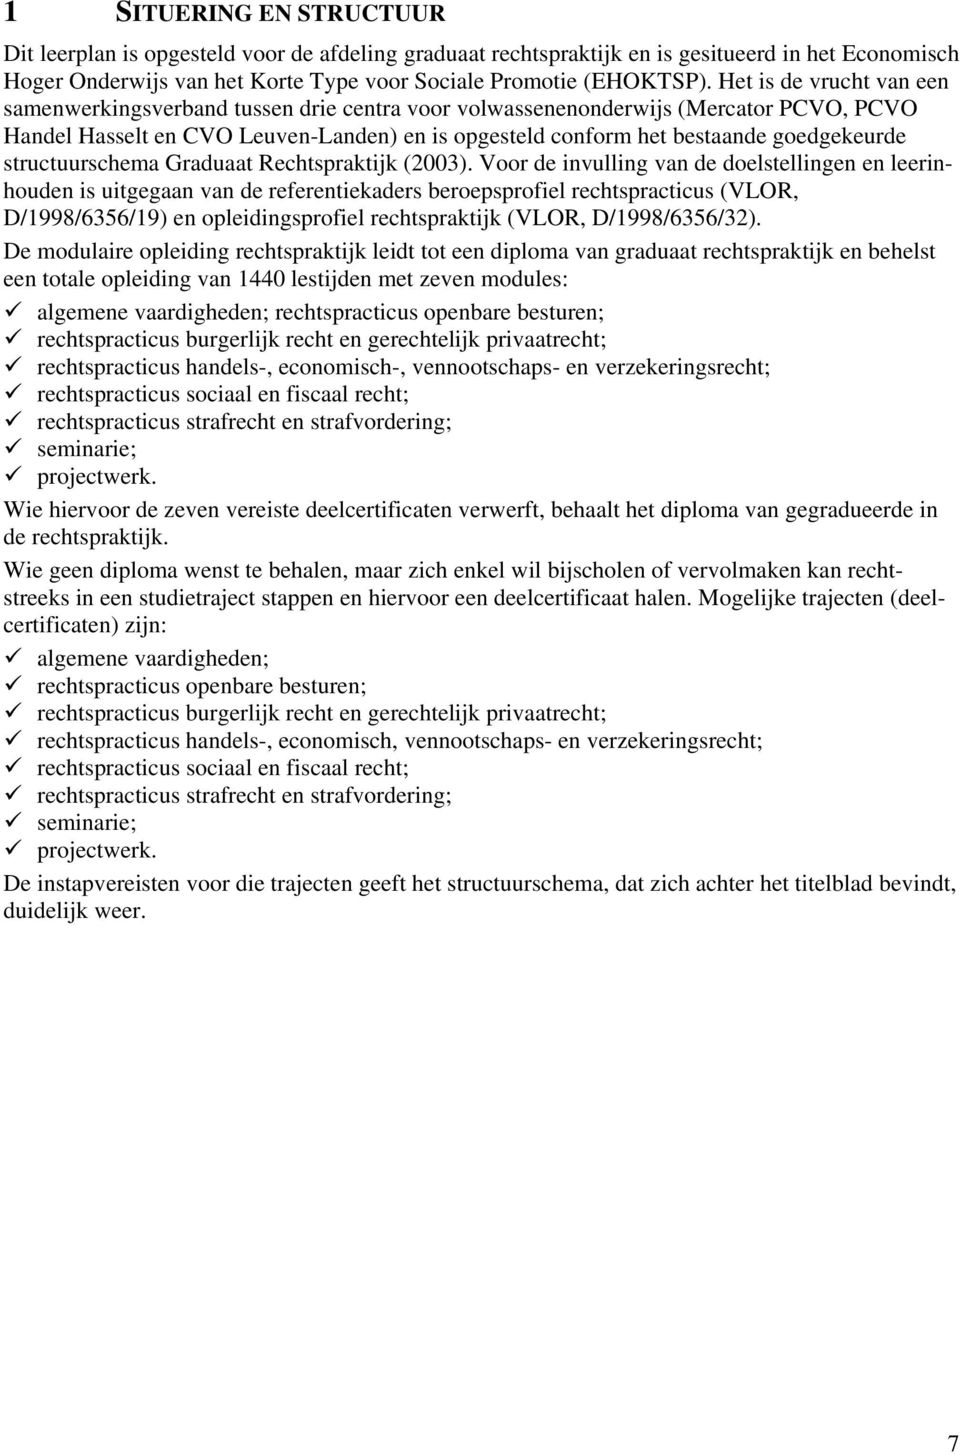 structuurschema Graduaat Rechtspraktijk (2003).